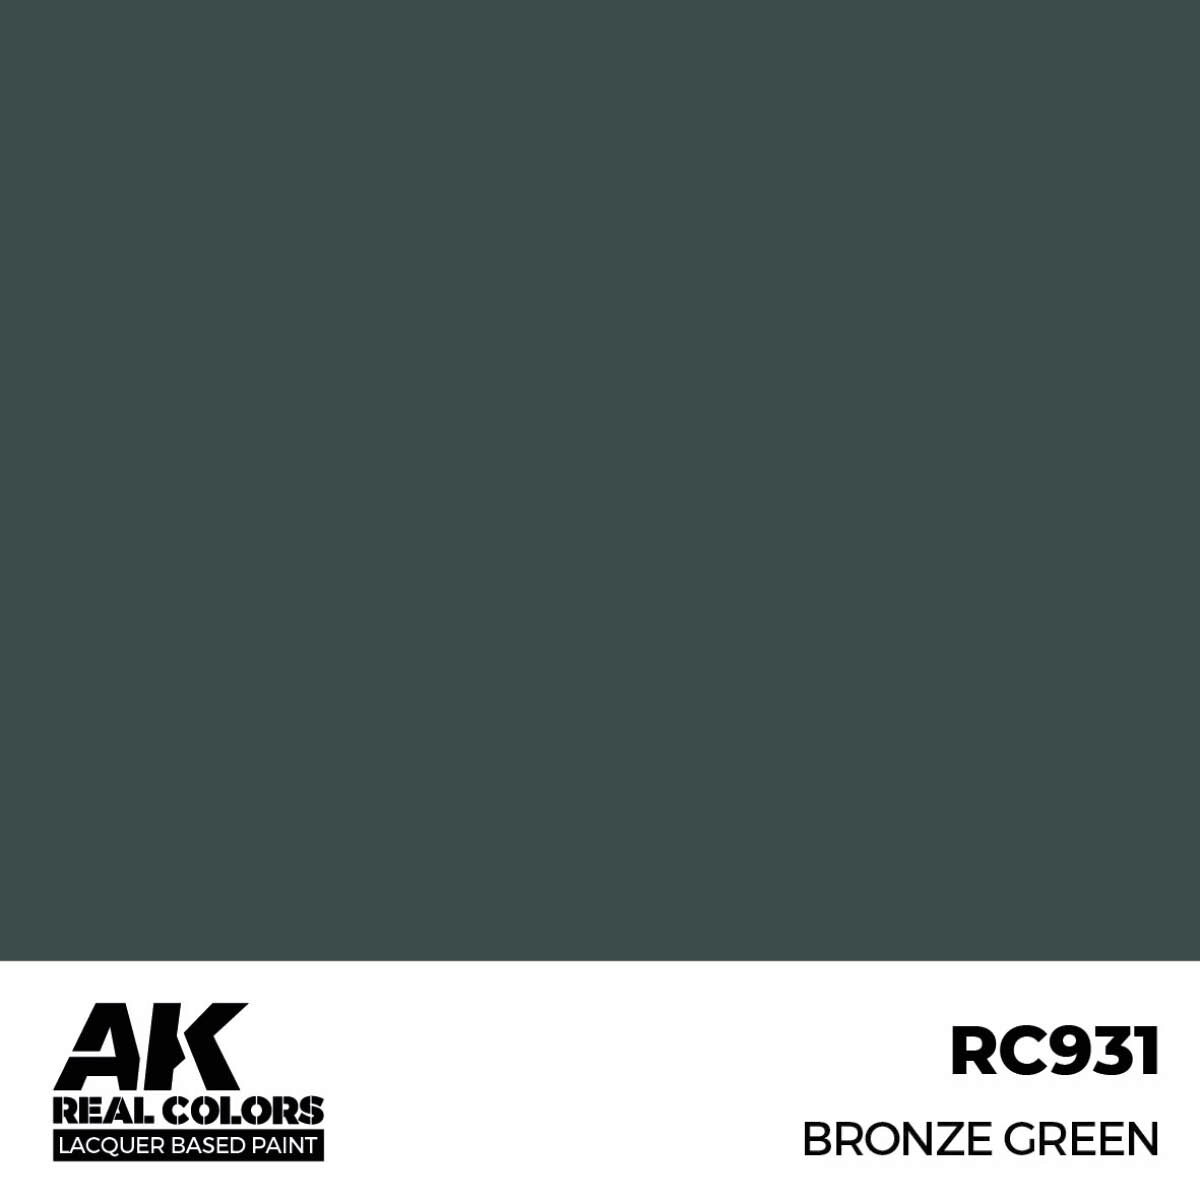 AK RC931 Real Colors Bronze Green 17 ml.